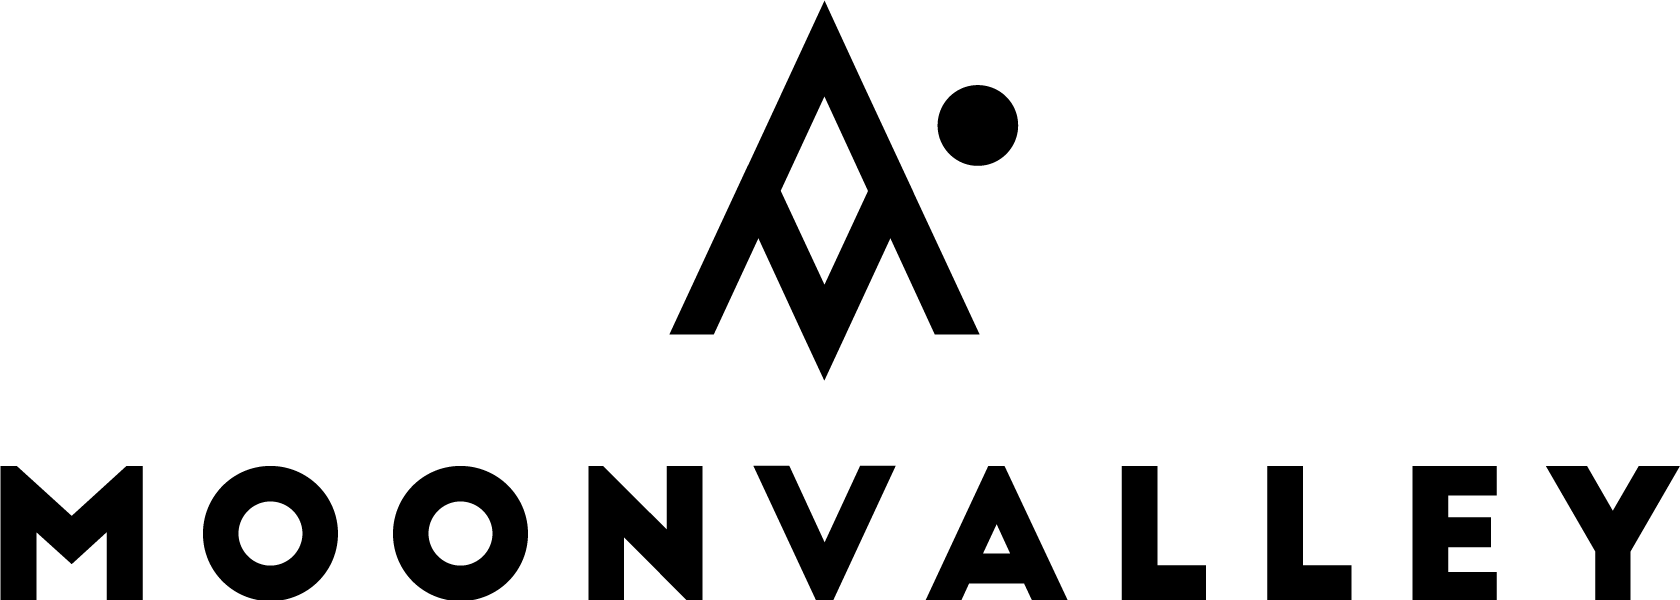 Moonvalley Logo